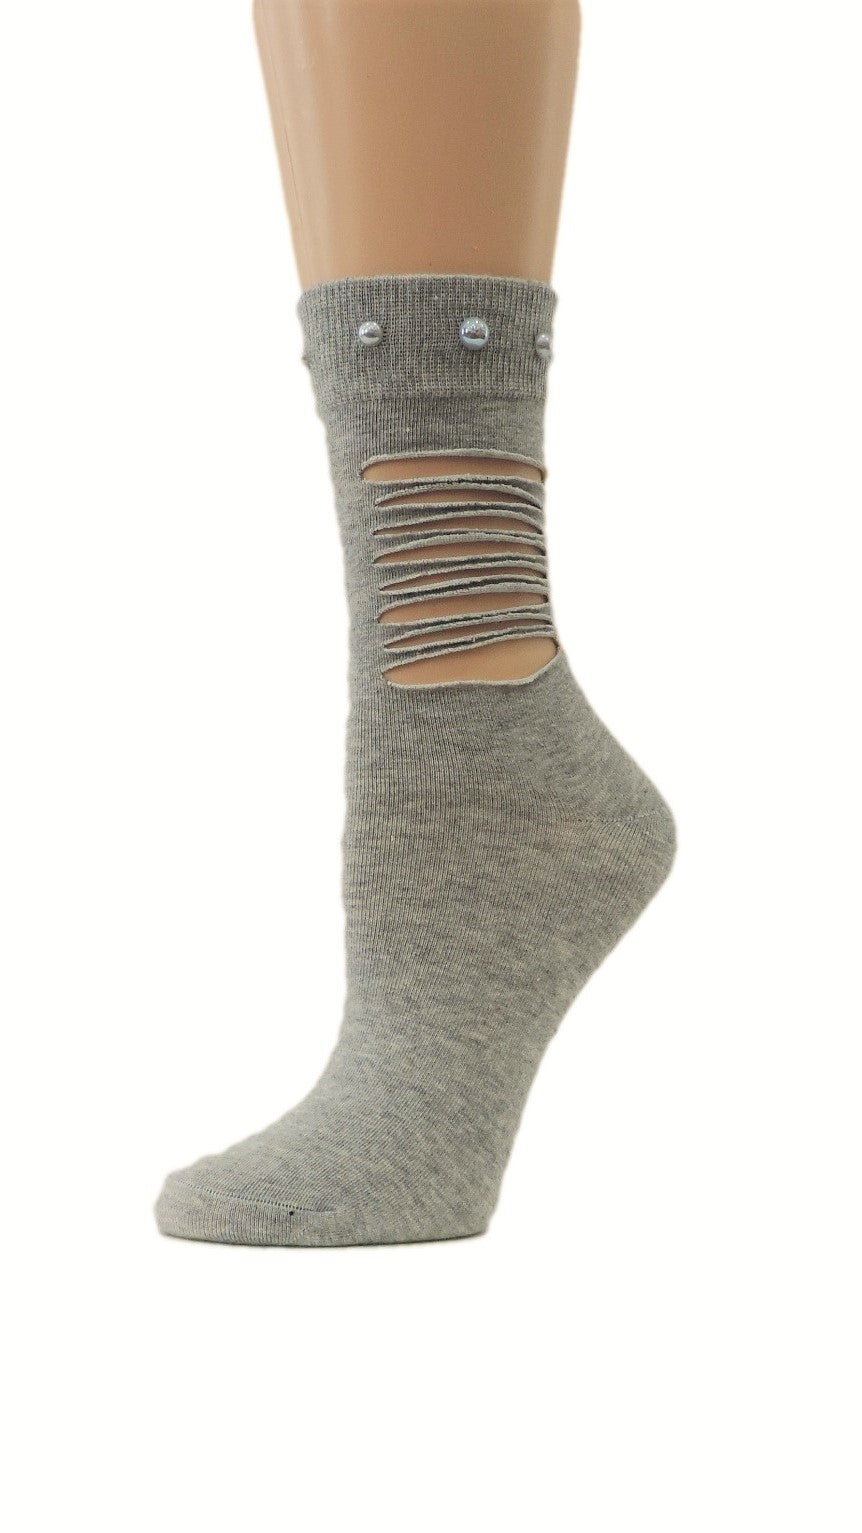 Ripped Grey Custom Fashion Socks with beads - Global Trendz Fashion®